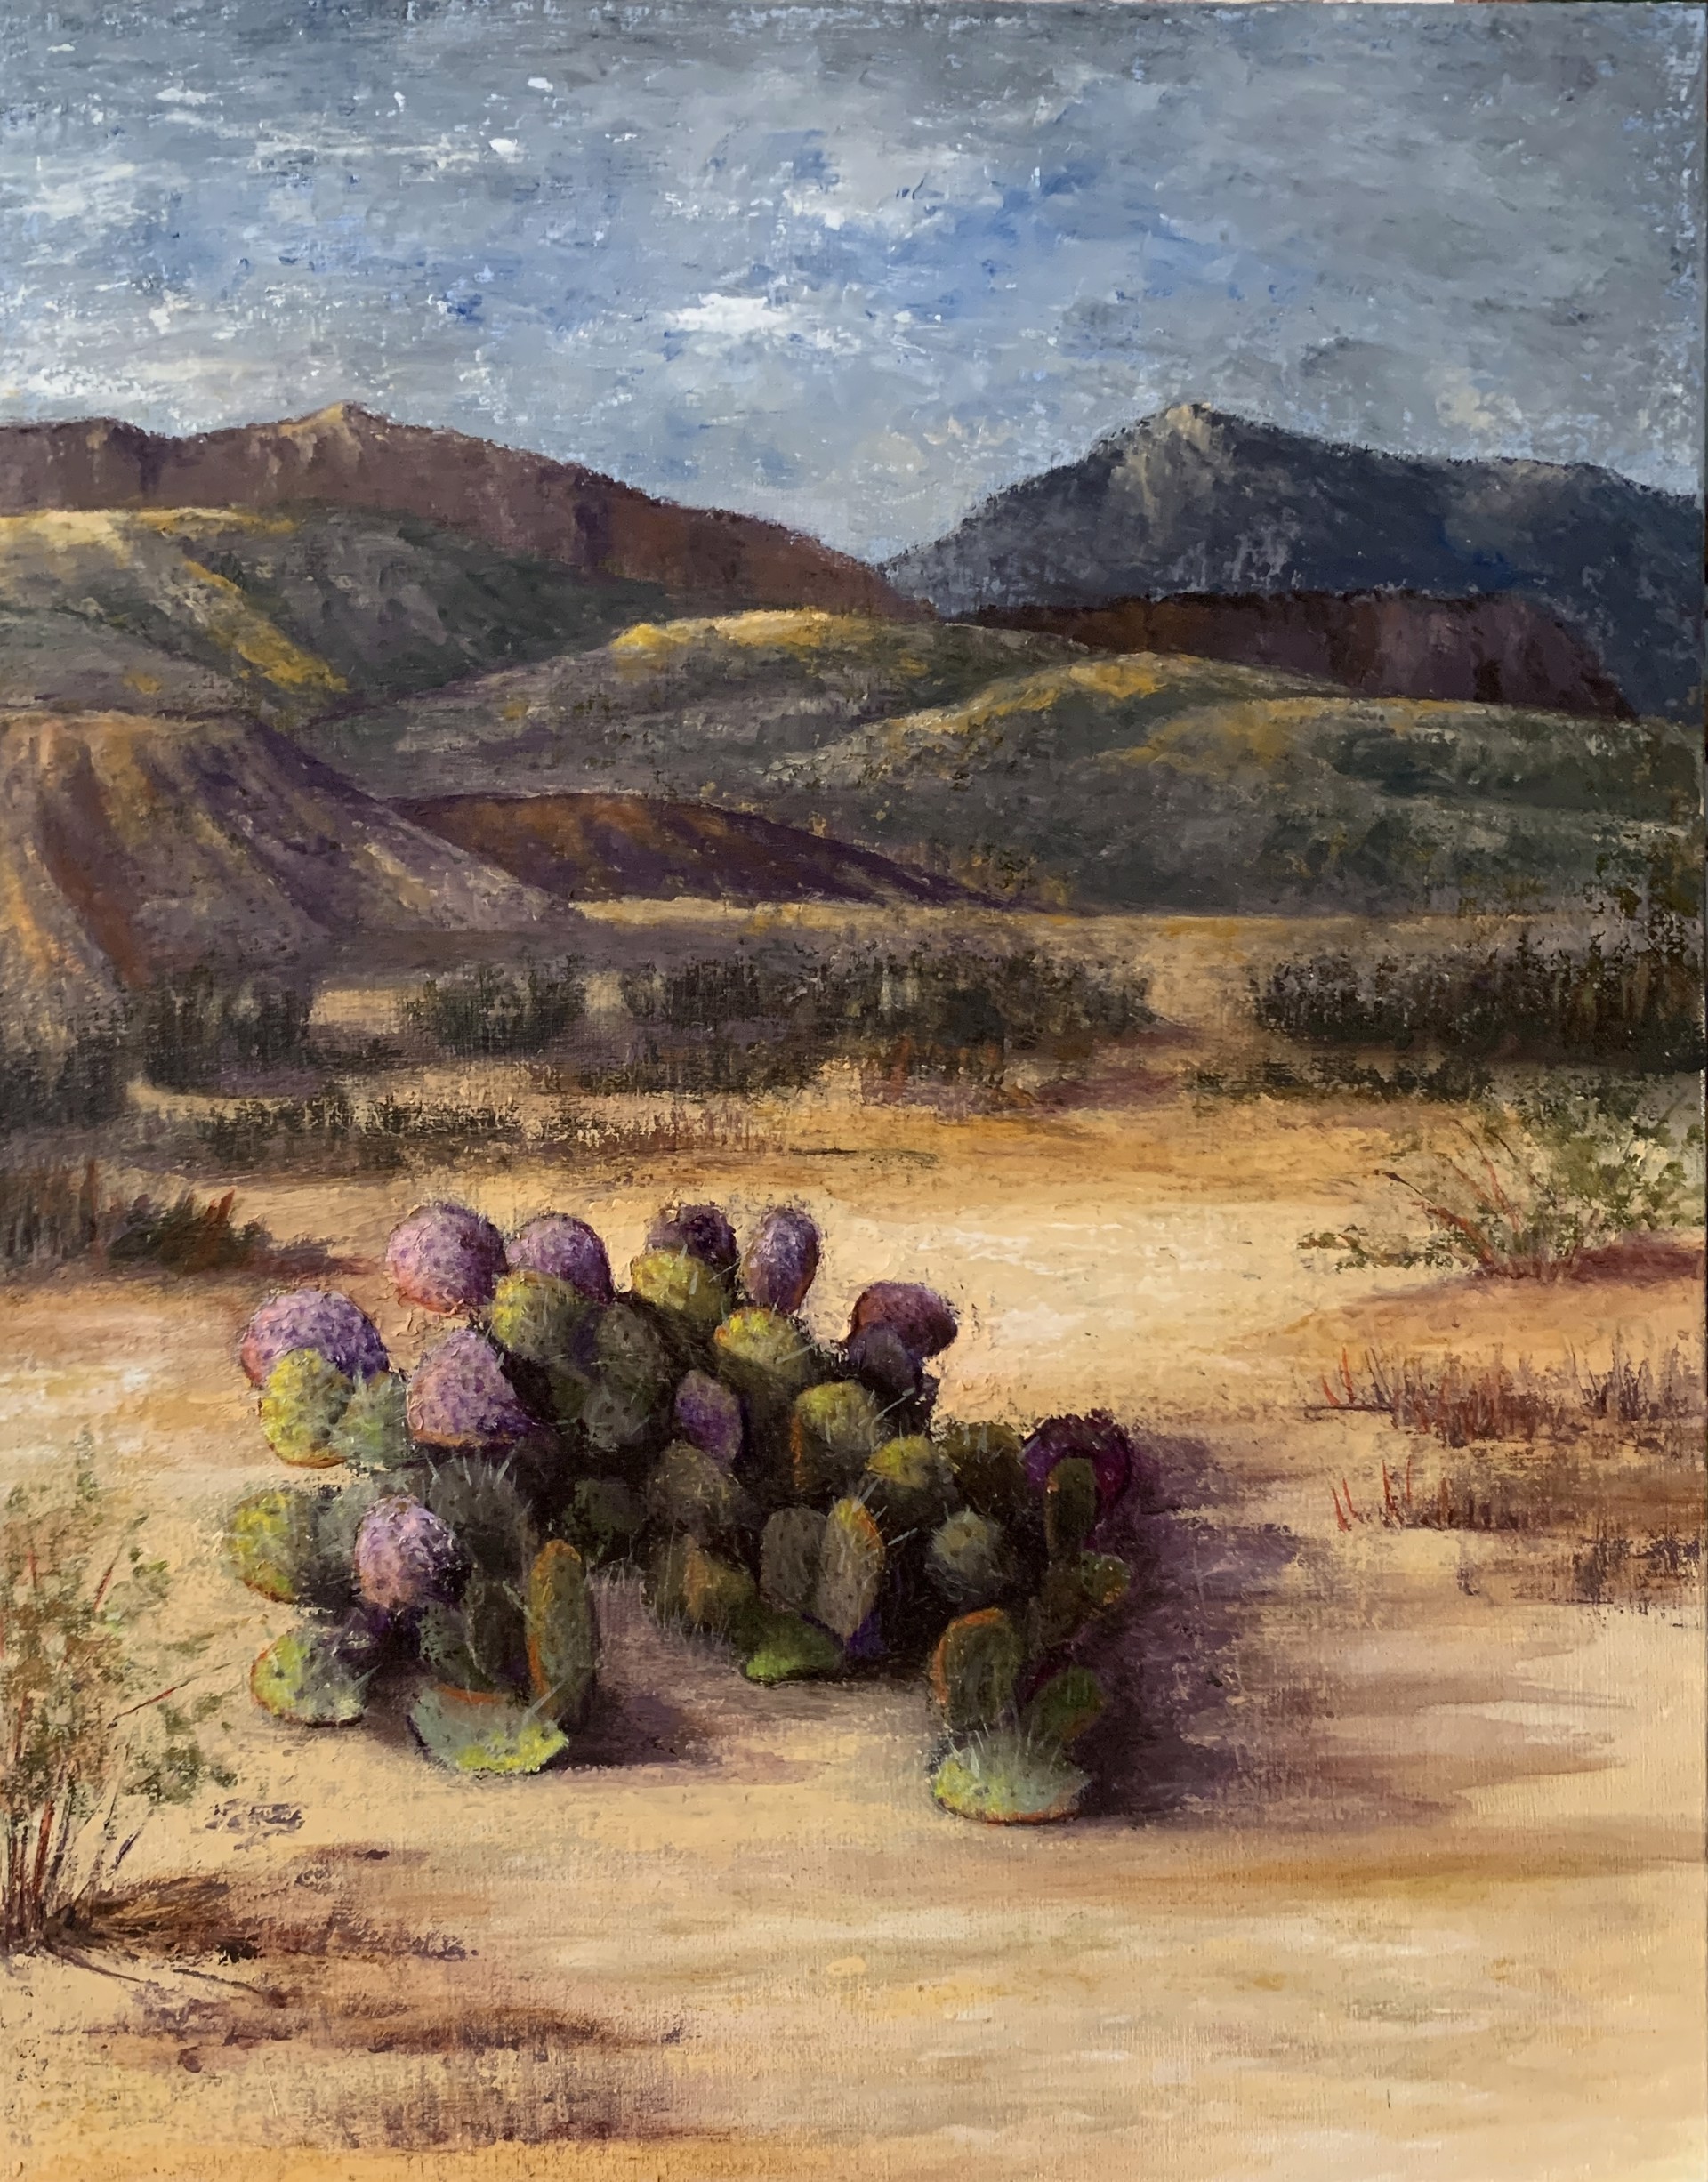 Dusk in the Desert by Jill Webber